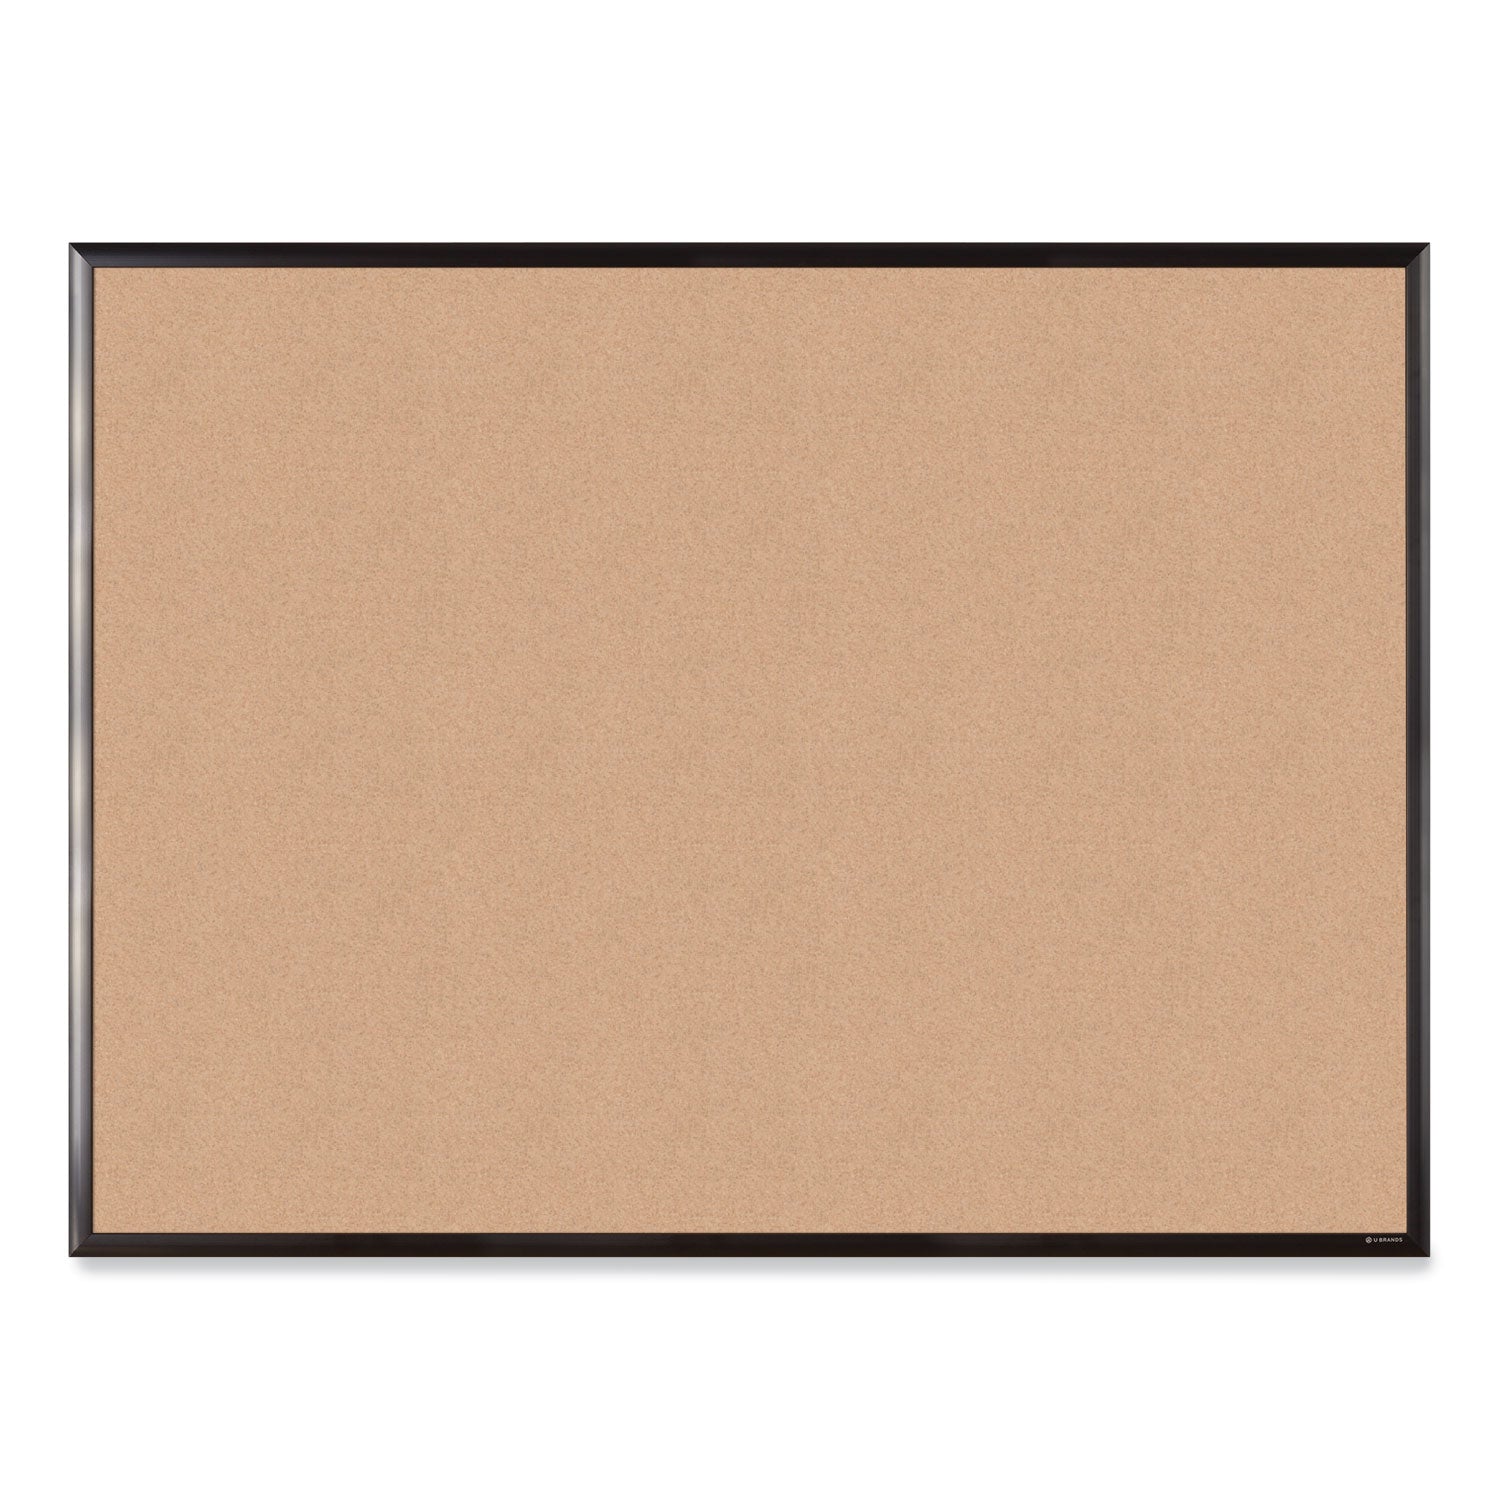 cork-bulletin-board-with-black-aluminum-frame-47-x-35-tan-surface_ubr050u0001 - 1